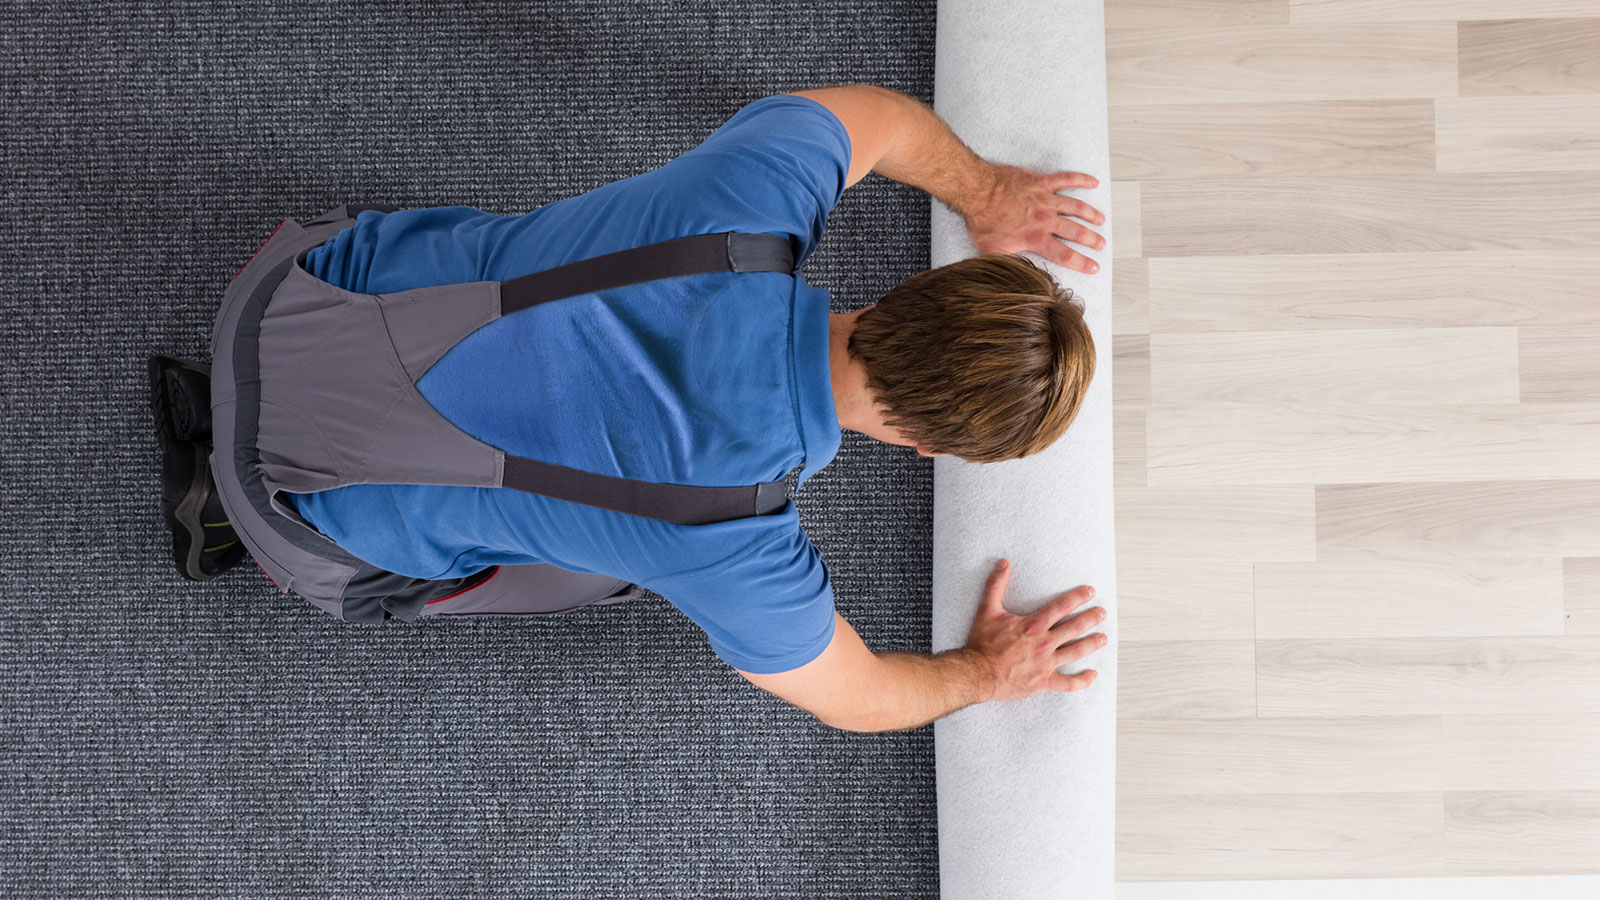 Carpet Repair - Reys Carpet & Flooring Quality Service